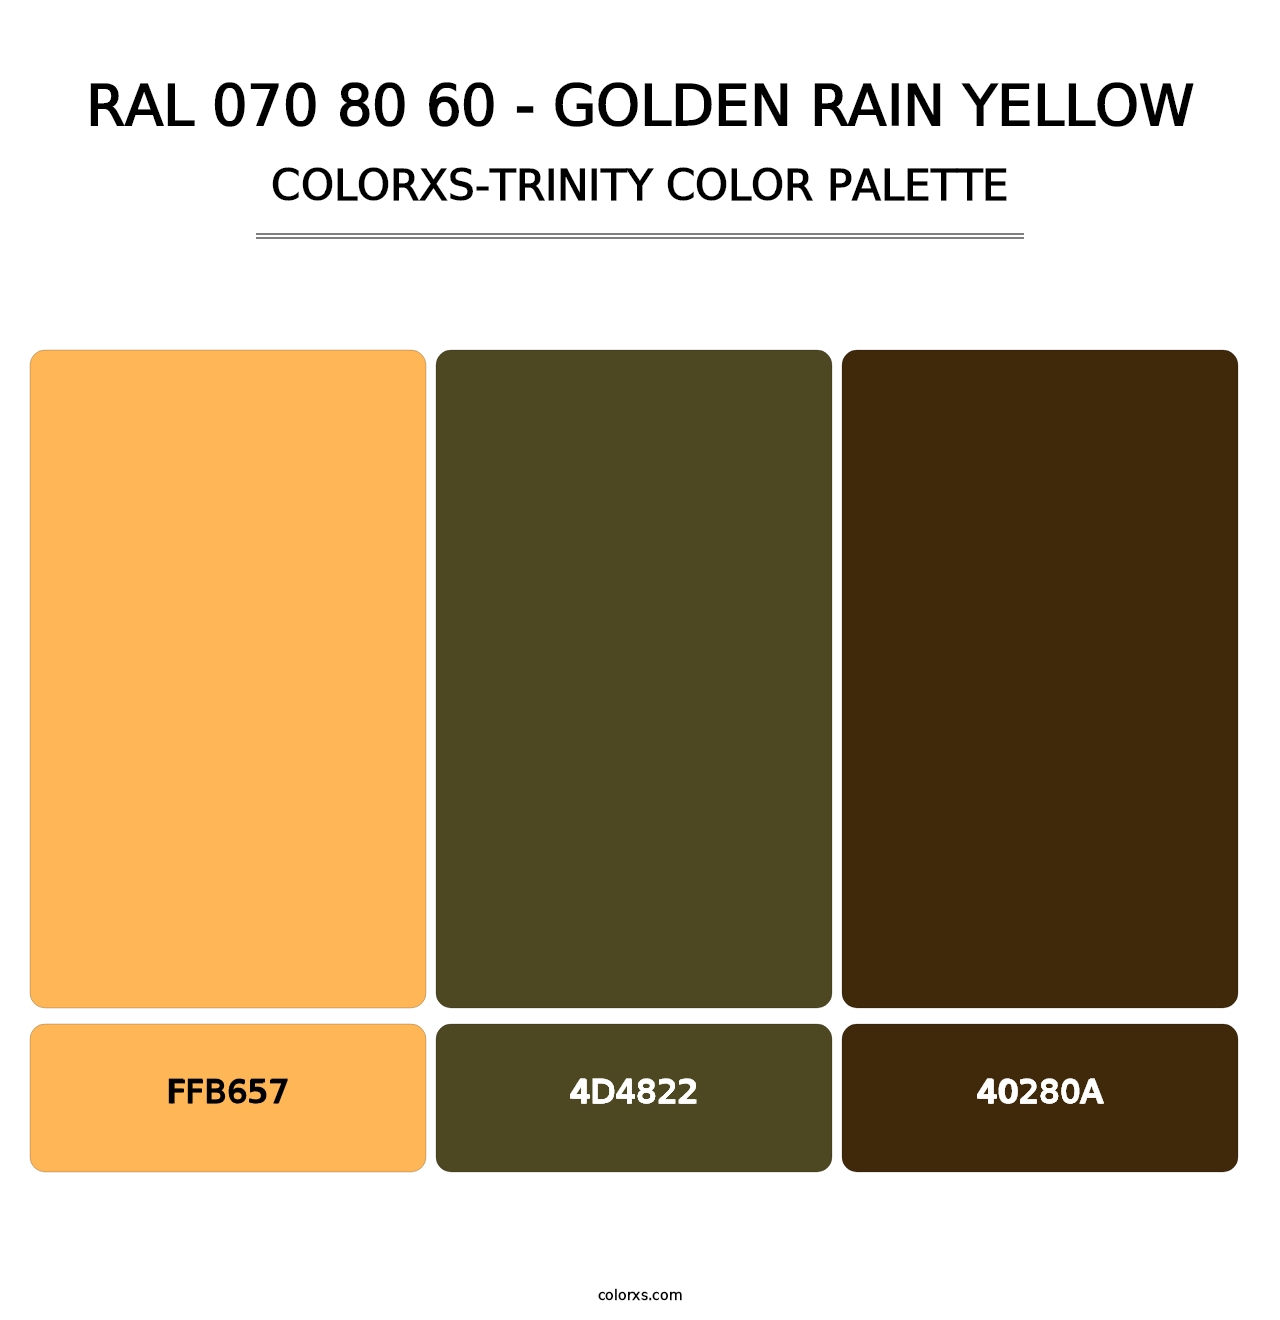 RAL 070 80 60 - Golden Rain Yellow - Colorxs Trinity Palette